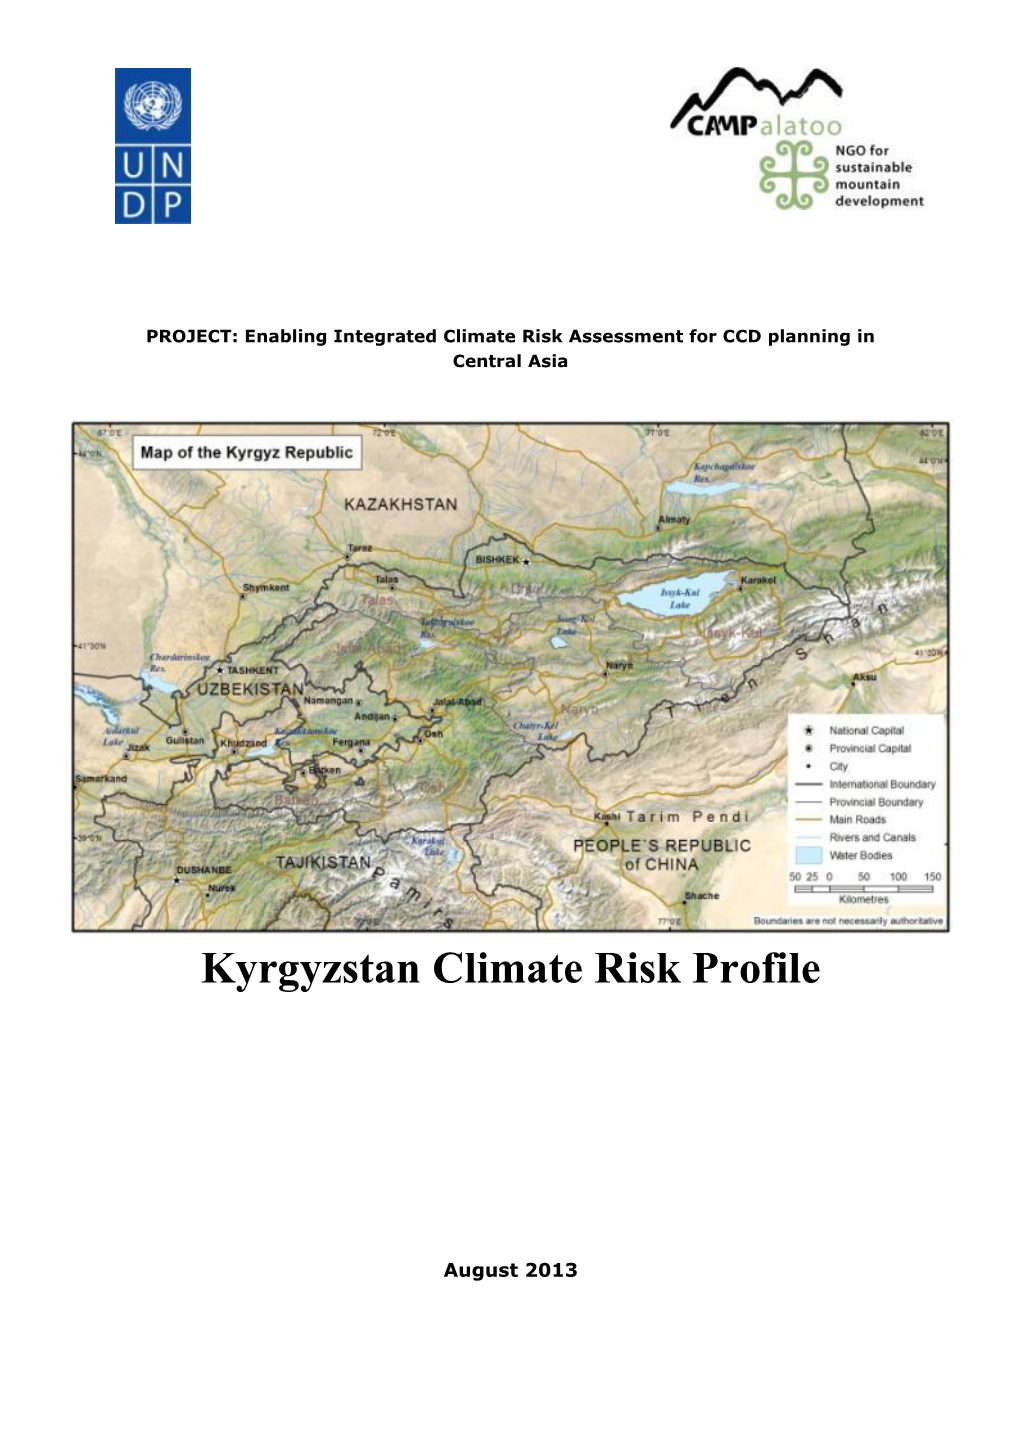 Kyrgyzstan Climate Risk Profile